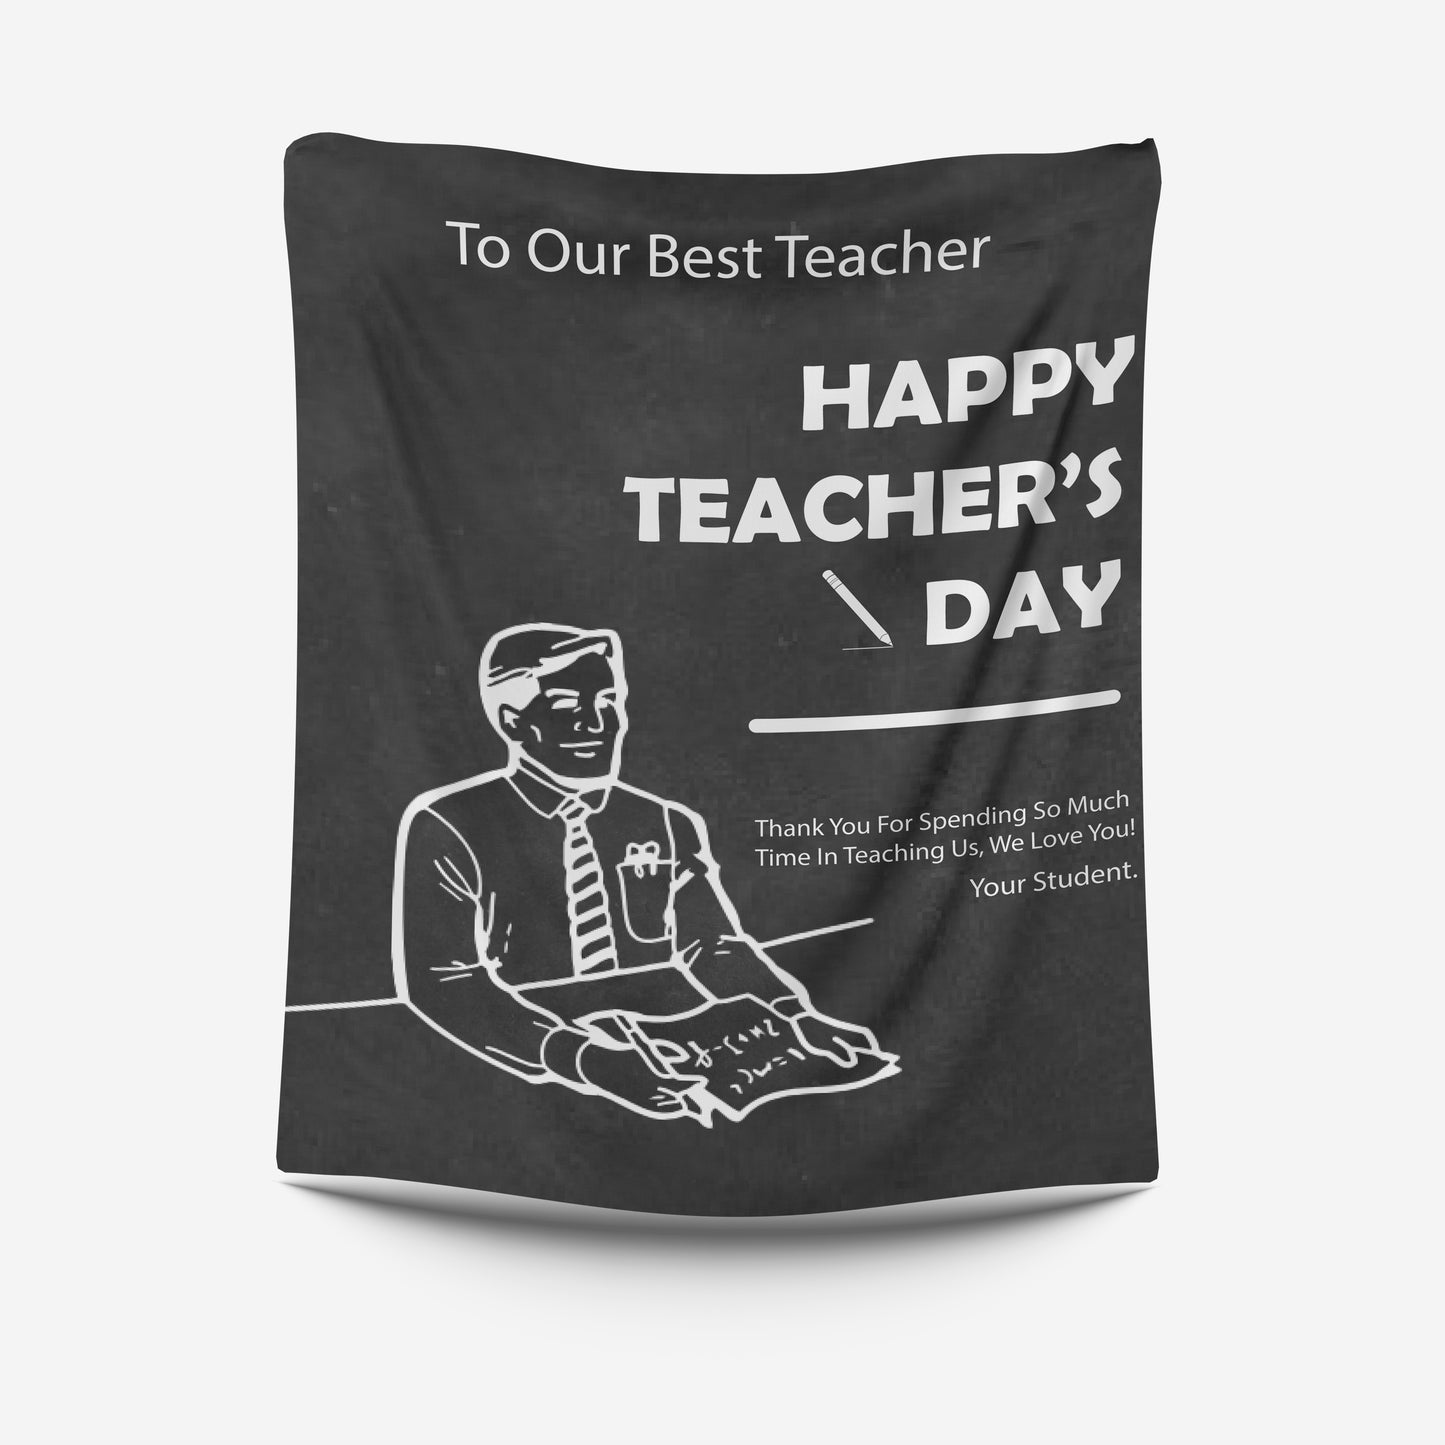 Blanket For A Teacher on a Teacher's Day, Design By Seerat